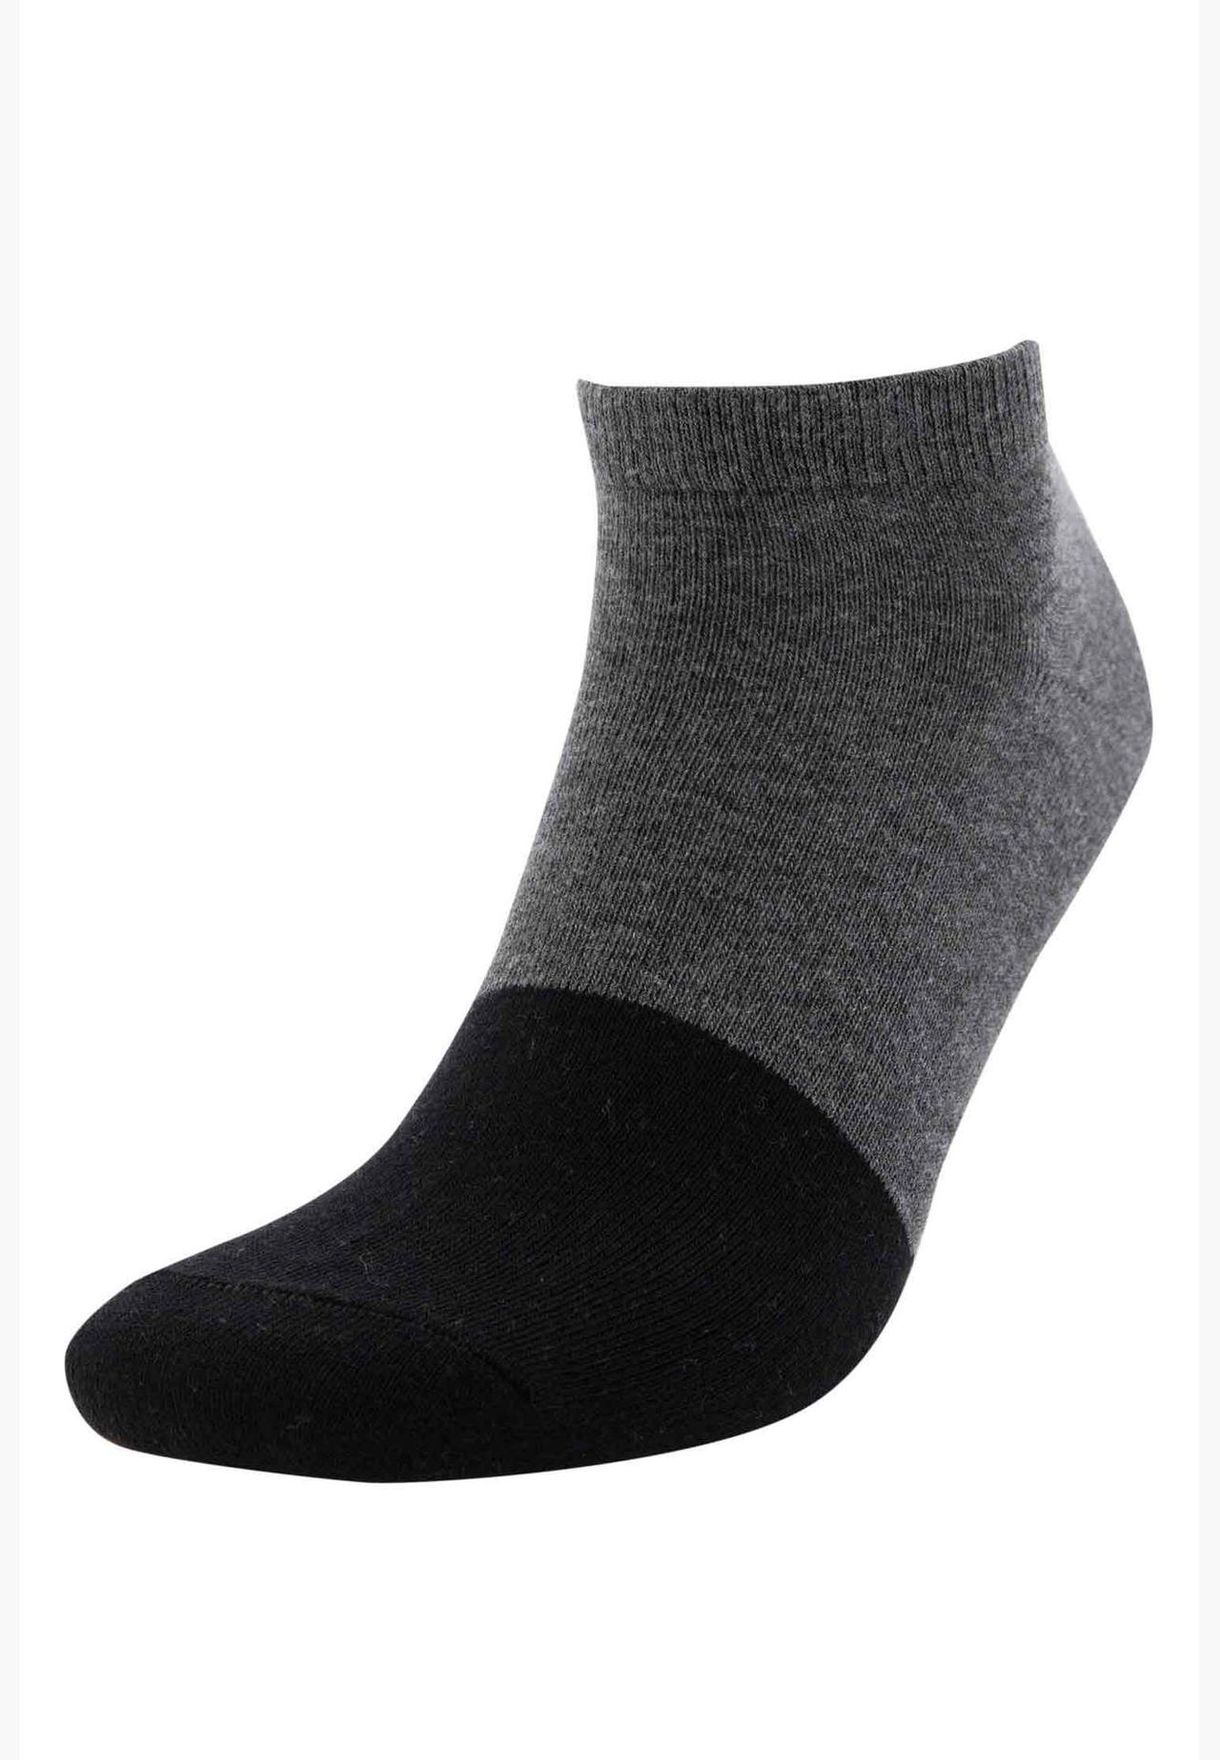 Patterned Low Cut Socks (5 Pack)